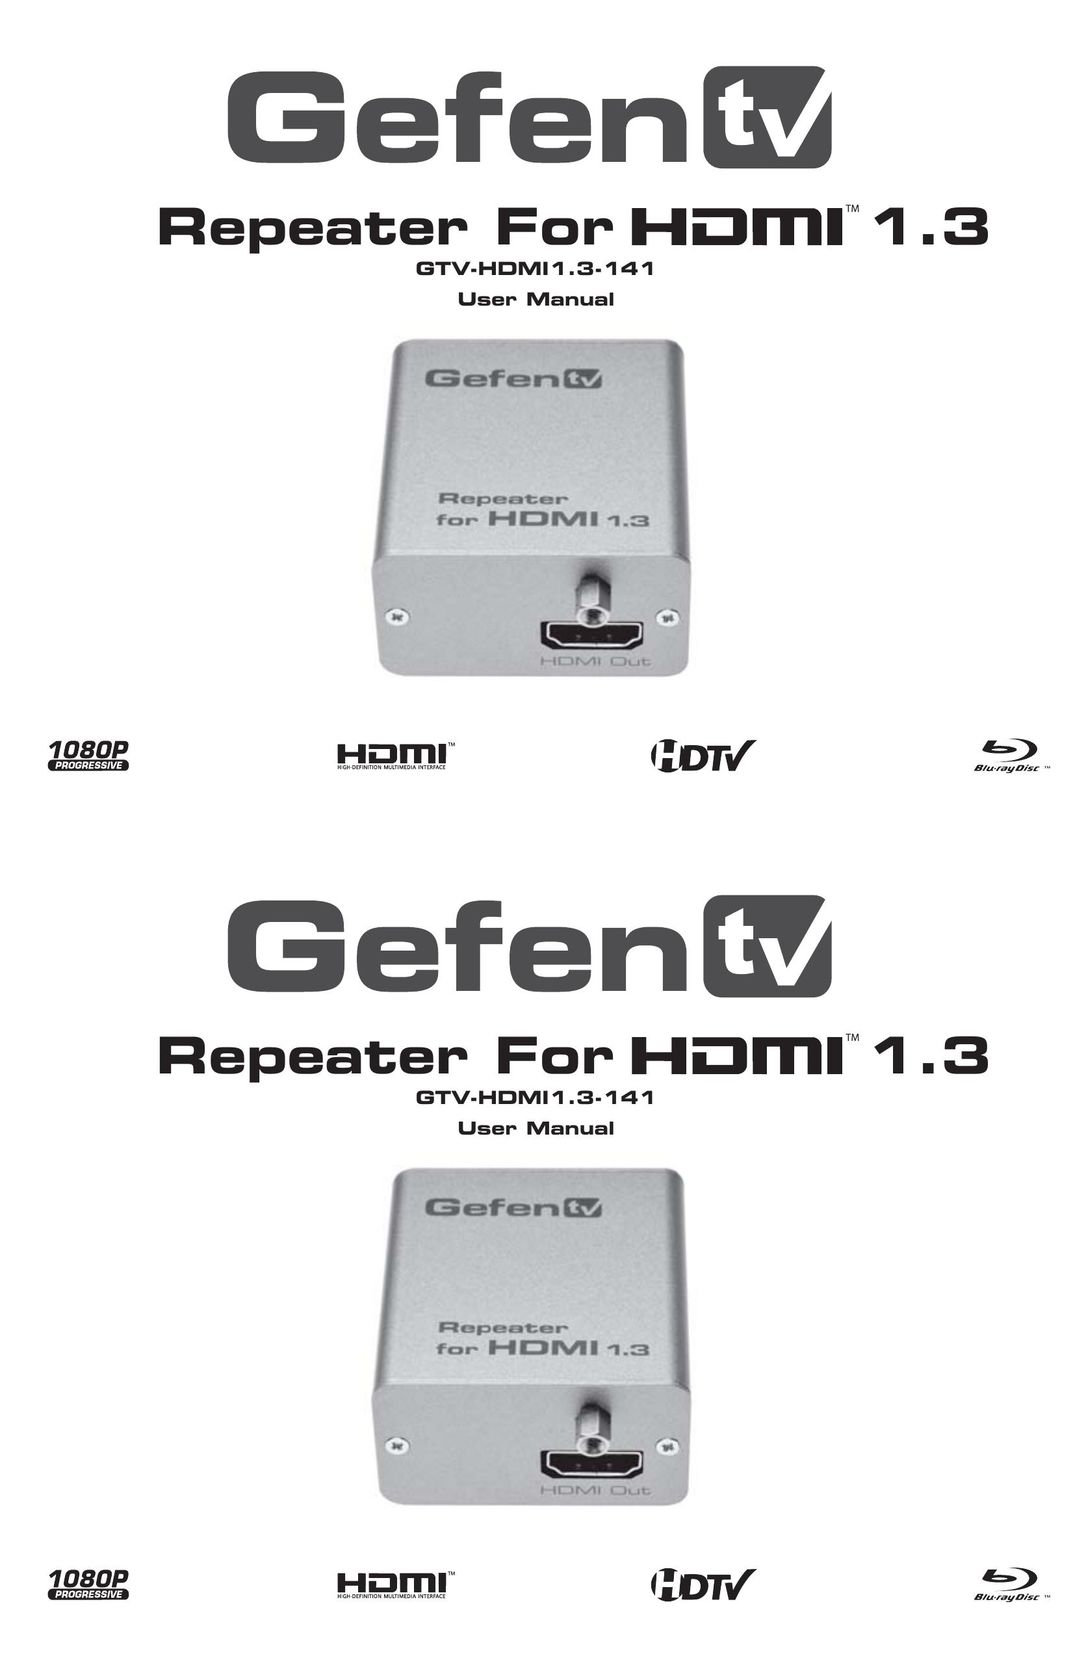 Gefen GTV-HDMI1.3-141 Network Card User Manual